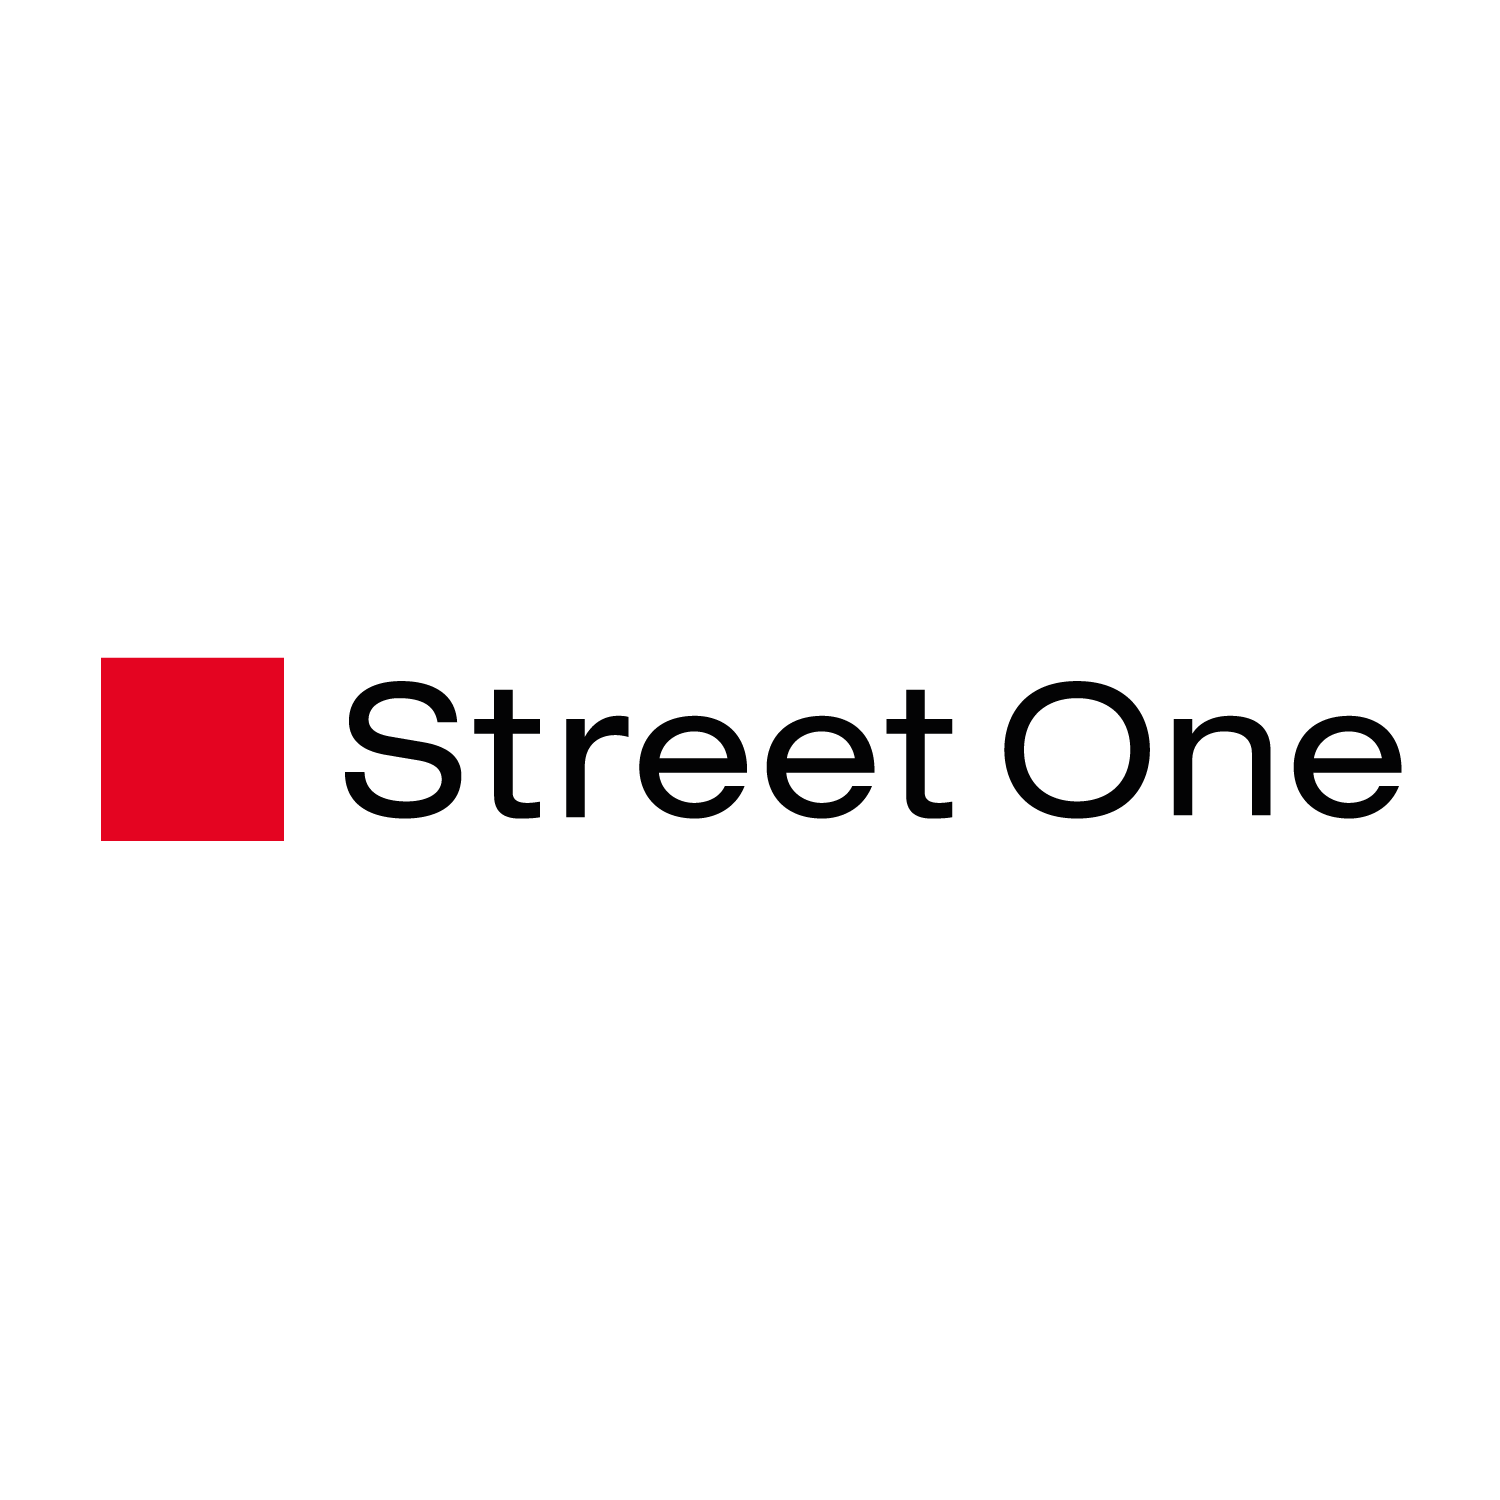 Street One